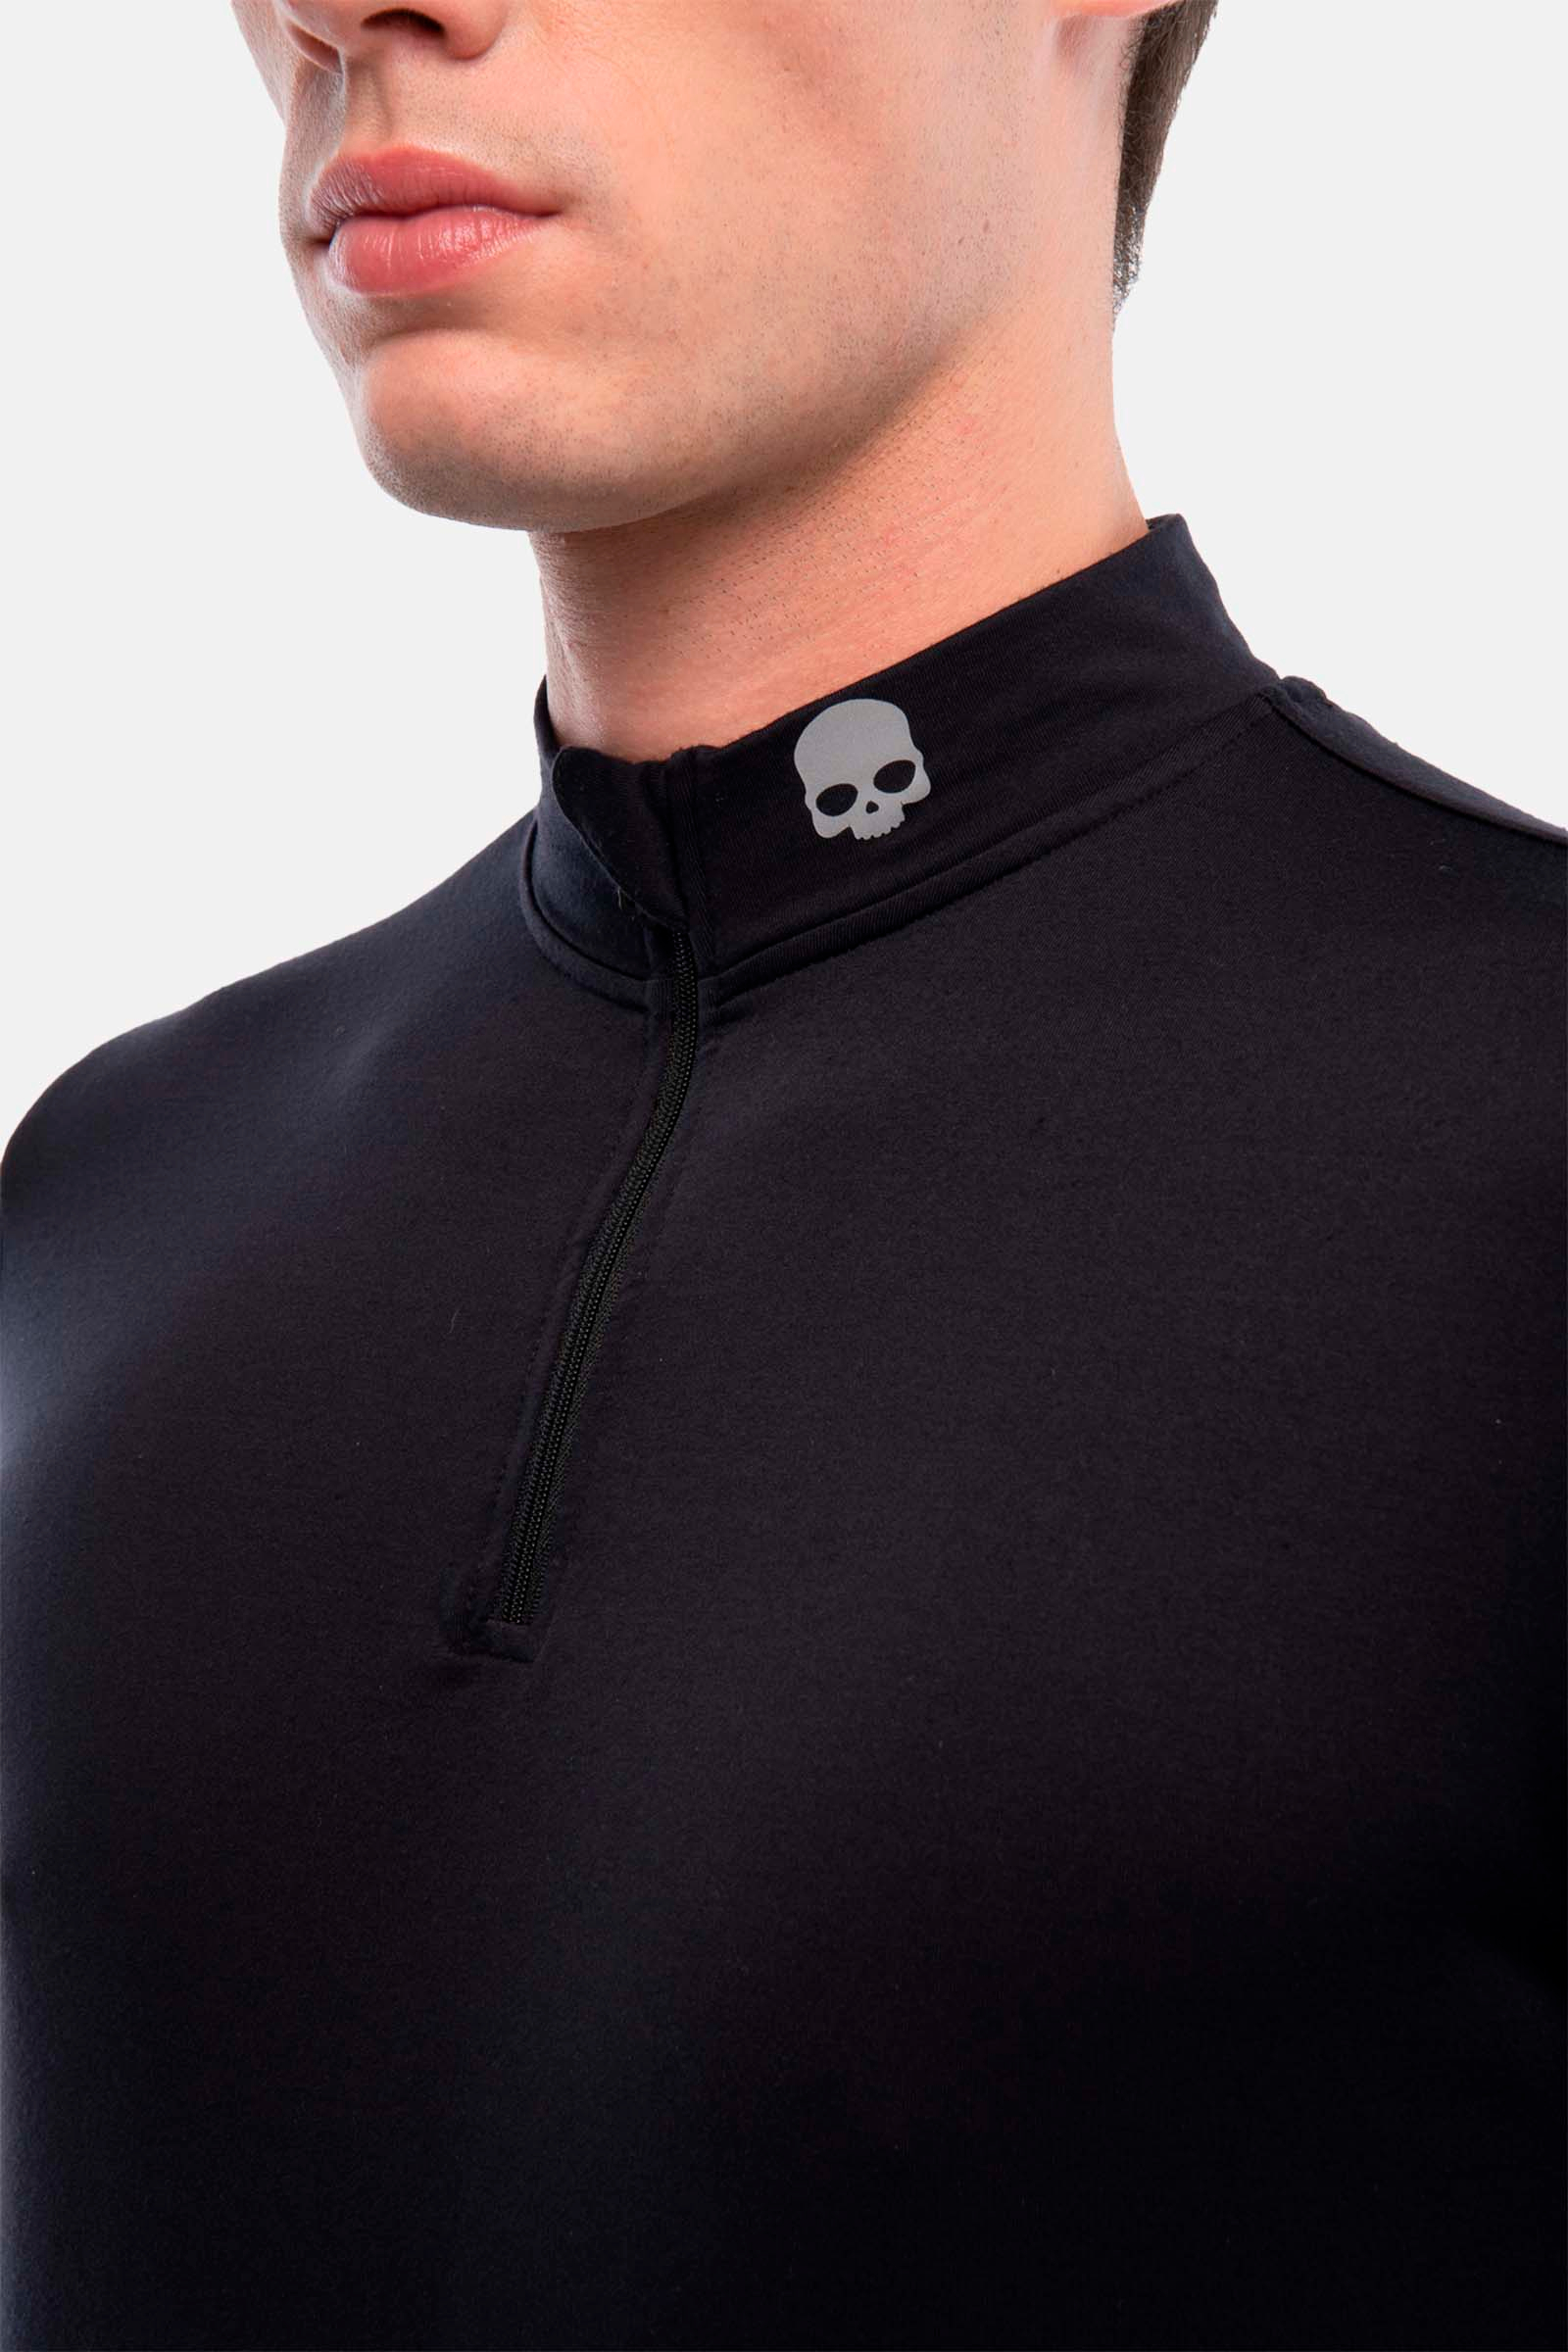 HALF ZIP NECK LS - BLACK - Hydrogen - Luxury Sportwear